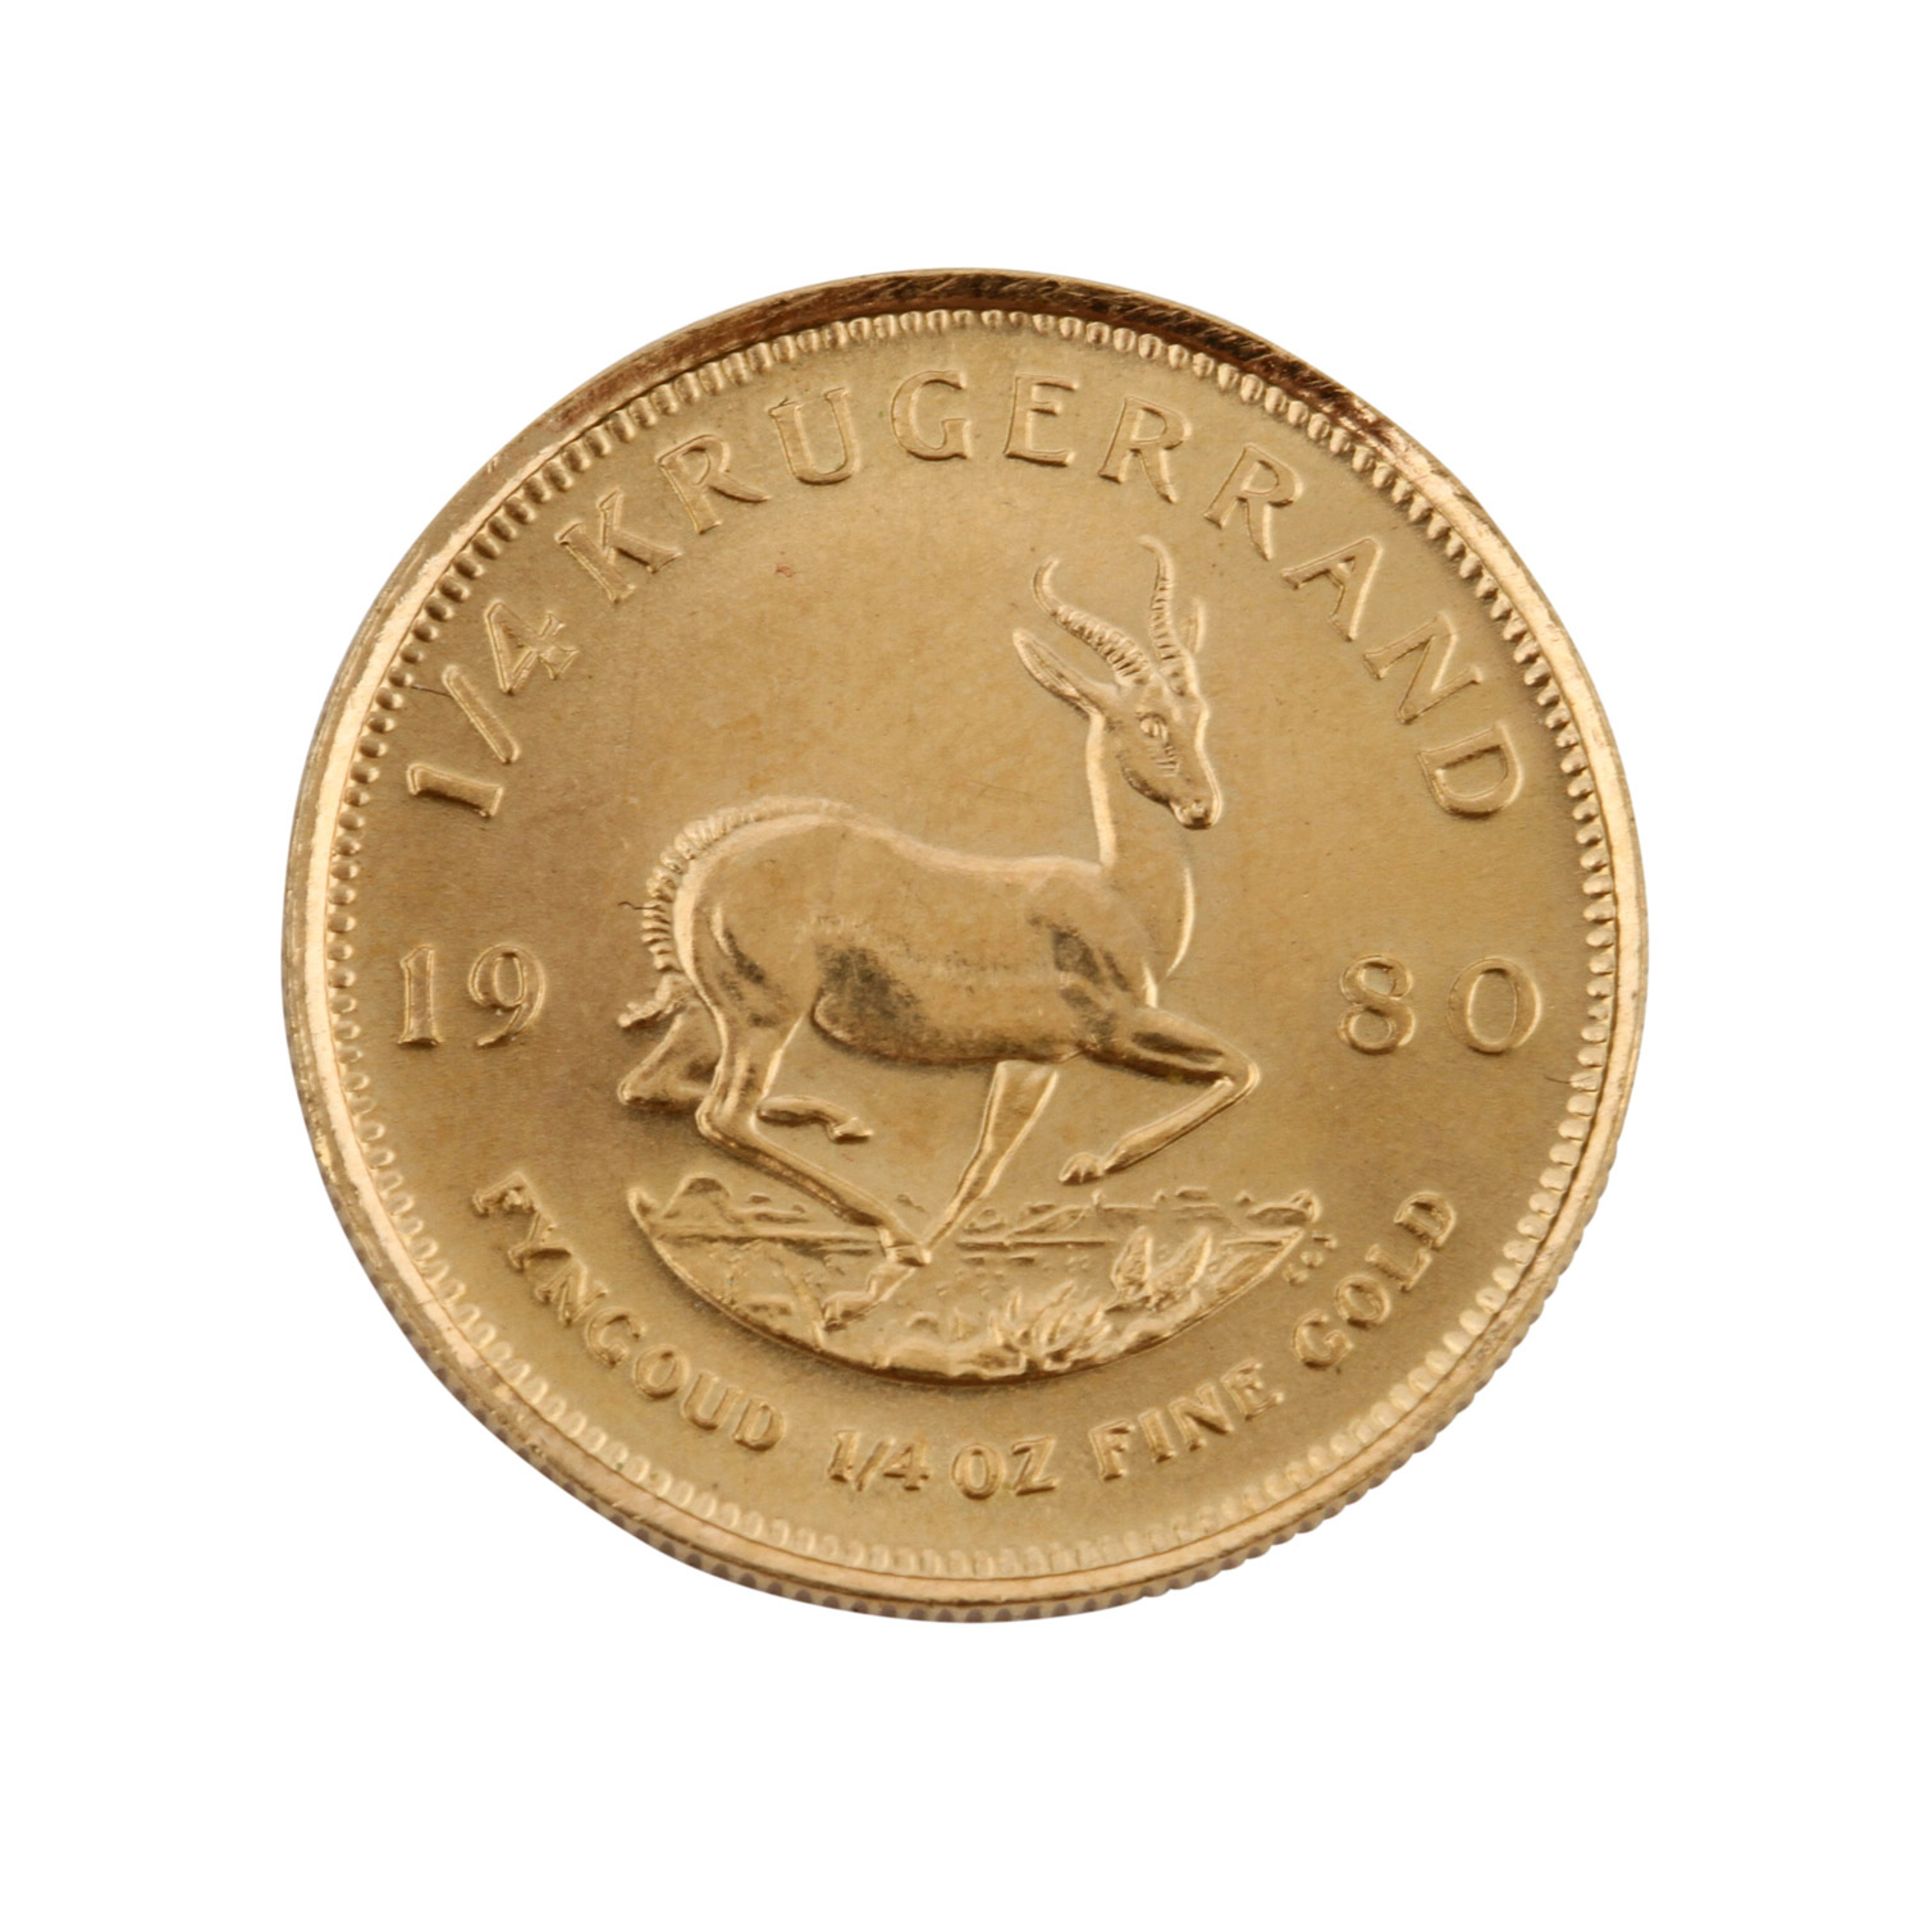 Südafrika/GOLD - 1/4 Unze GOLD fein, 1/4 Krügerrand 1980, vz., Fingerabdrücke,steuerbefreit nach § - Bild 2 aus 2